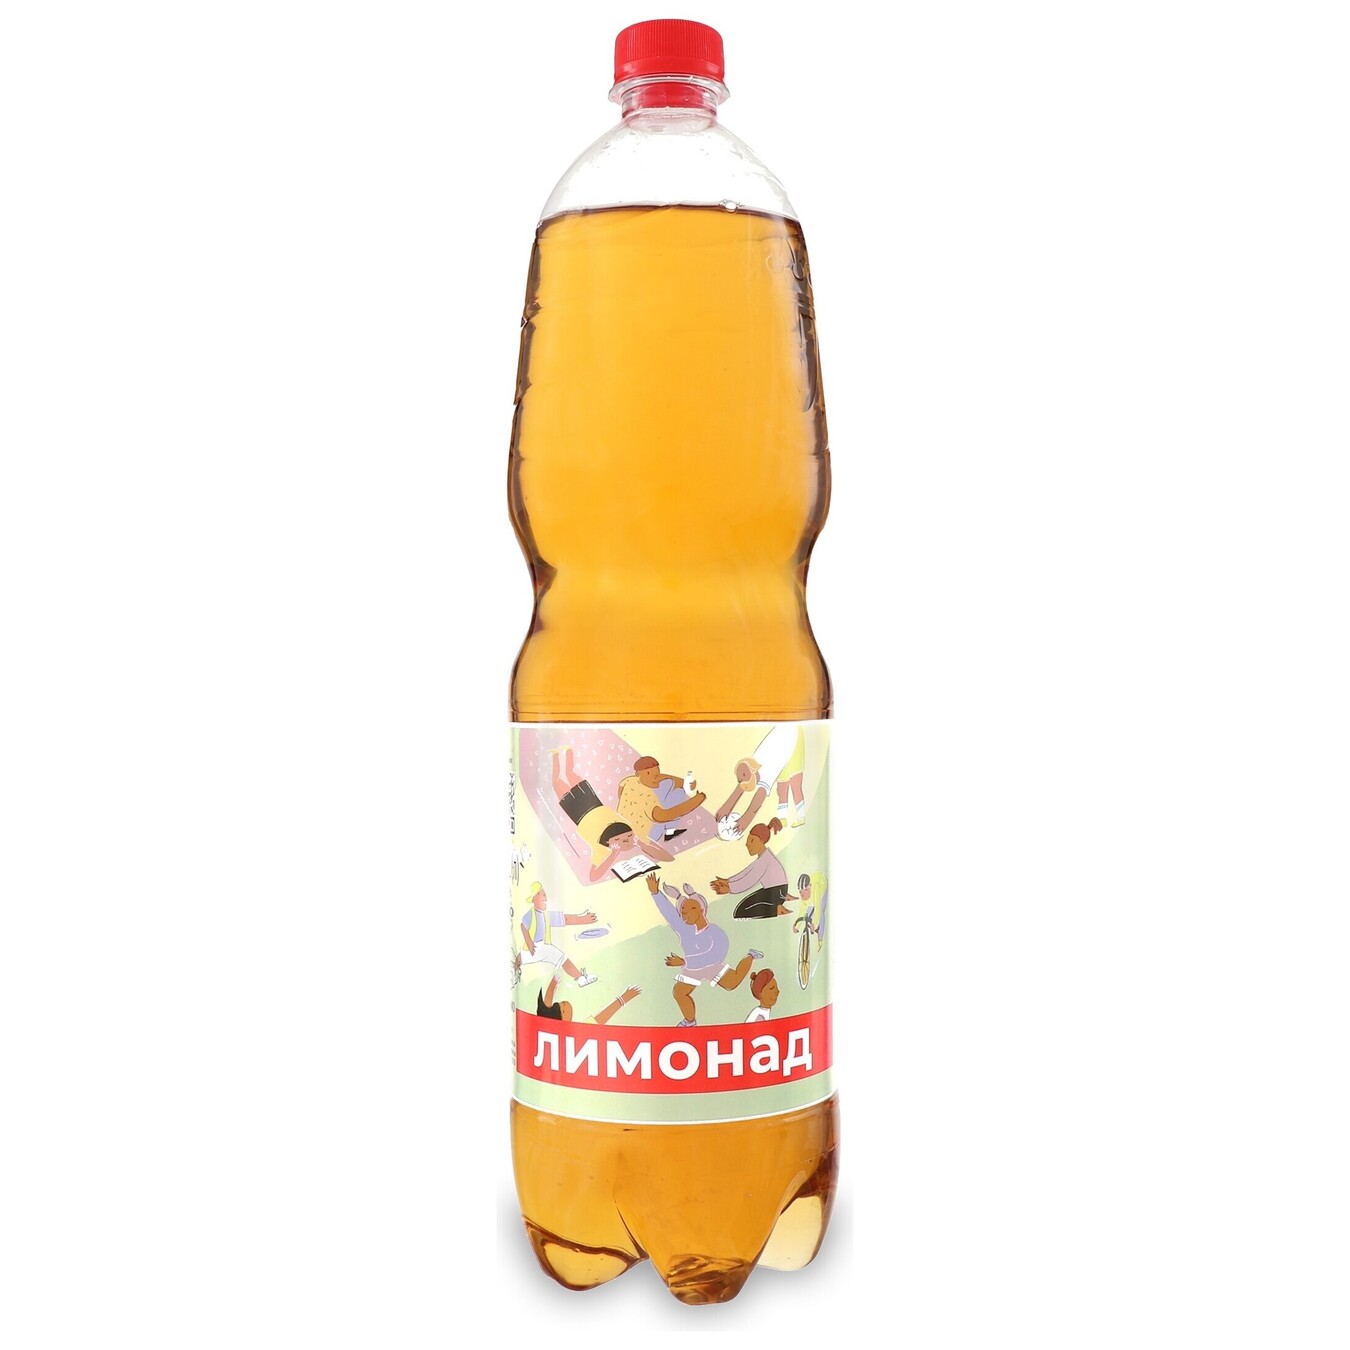 Uman Limonade carbonated drink 1.5l